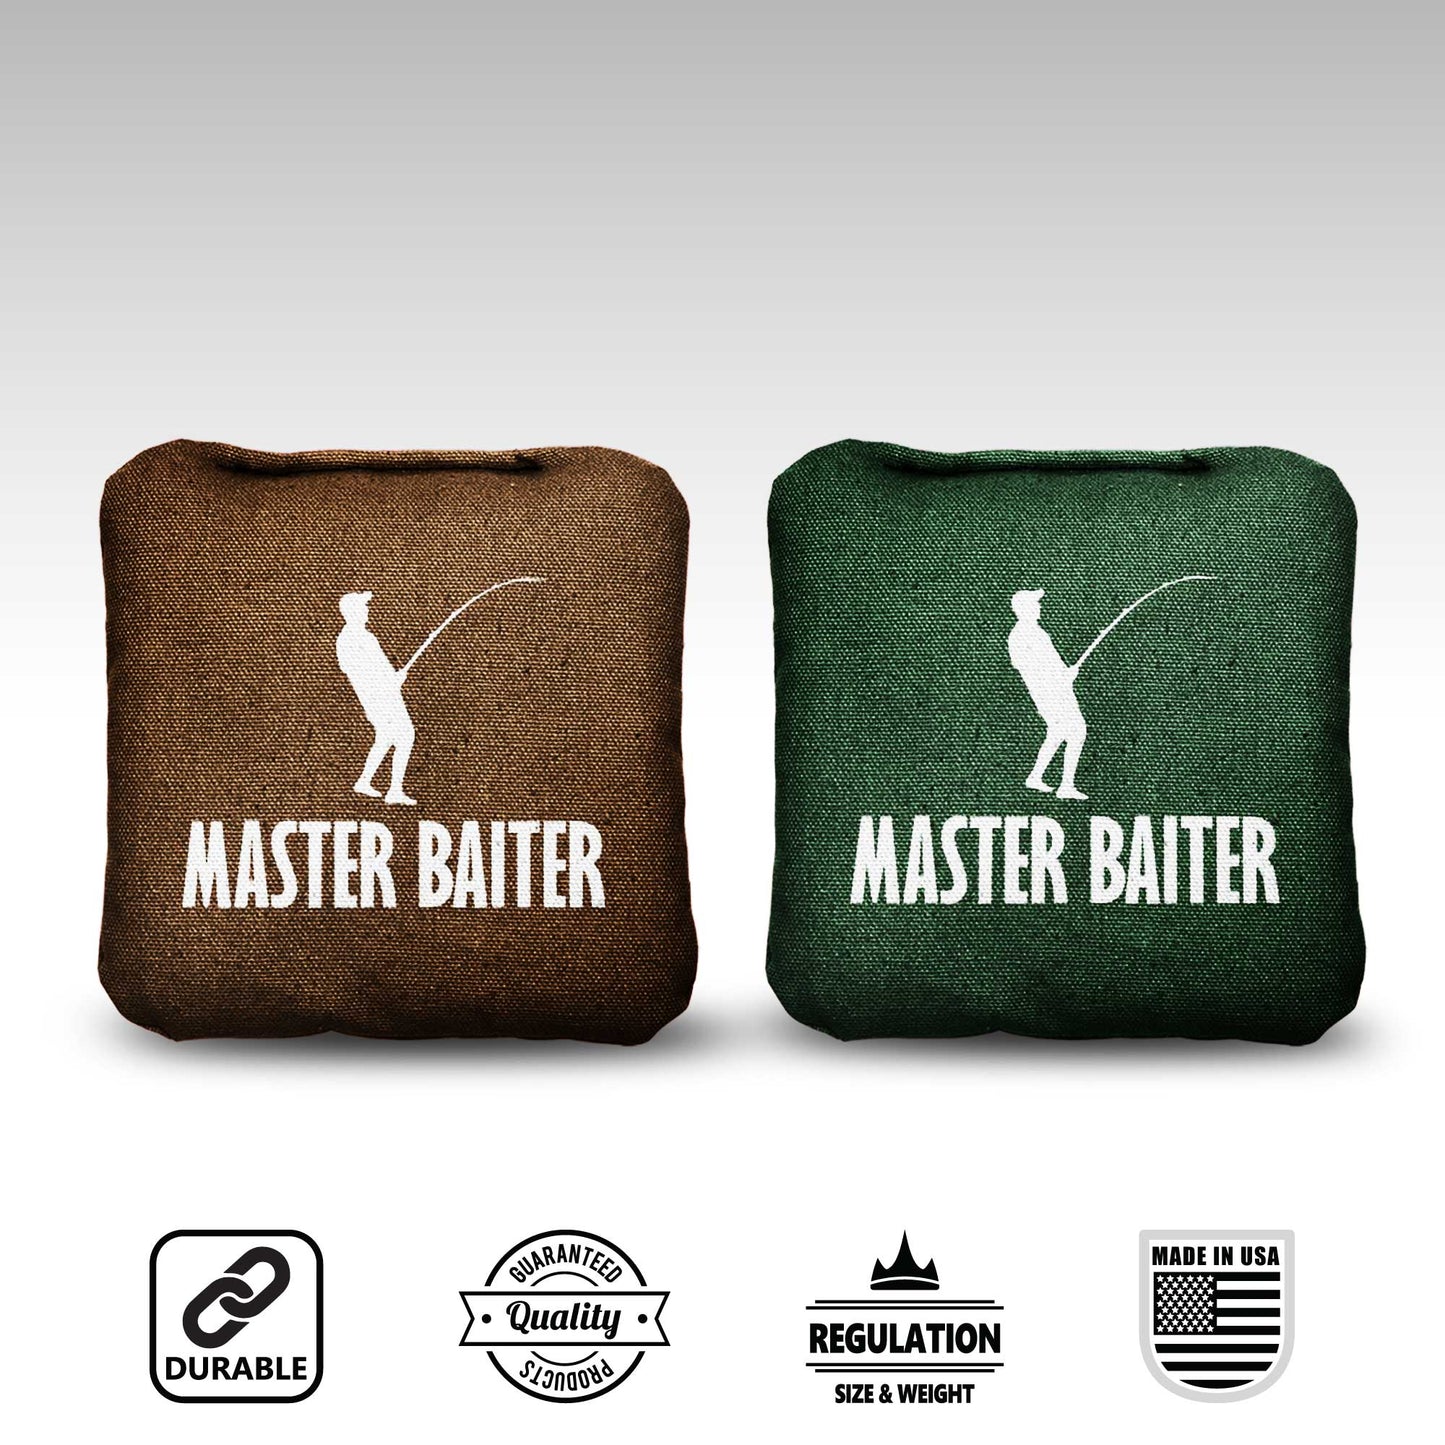 The Master Baiters - 8 Cornhole Bags